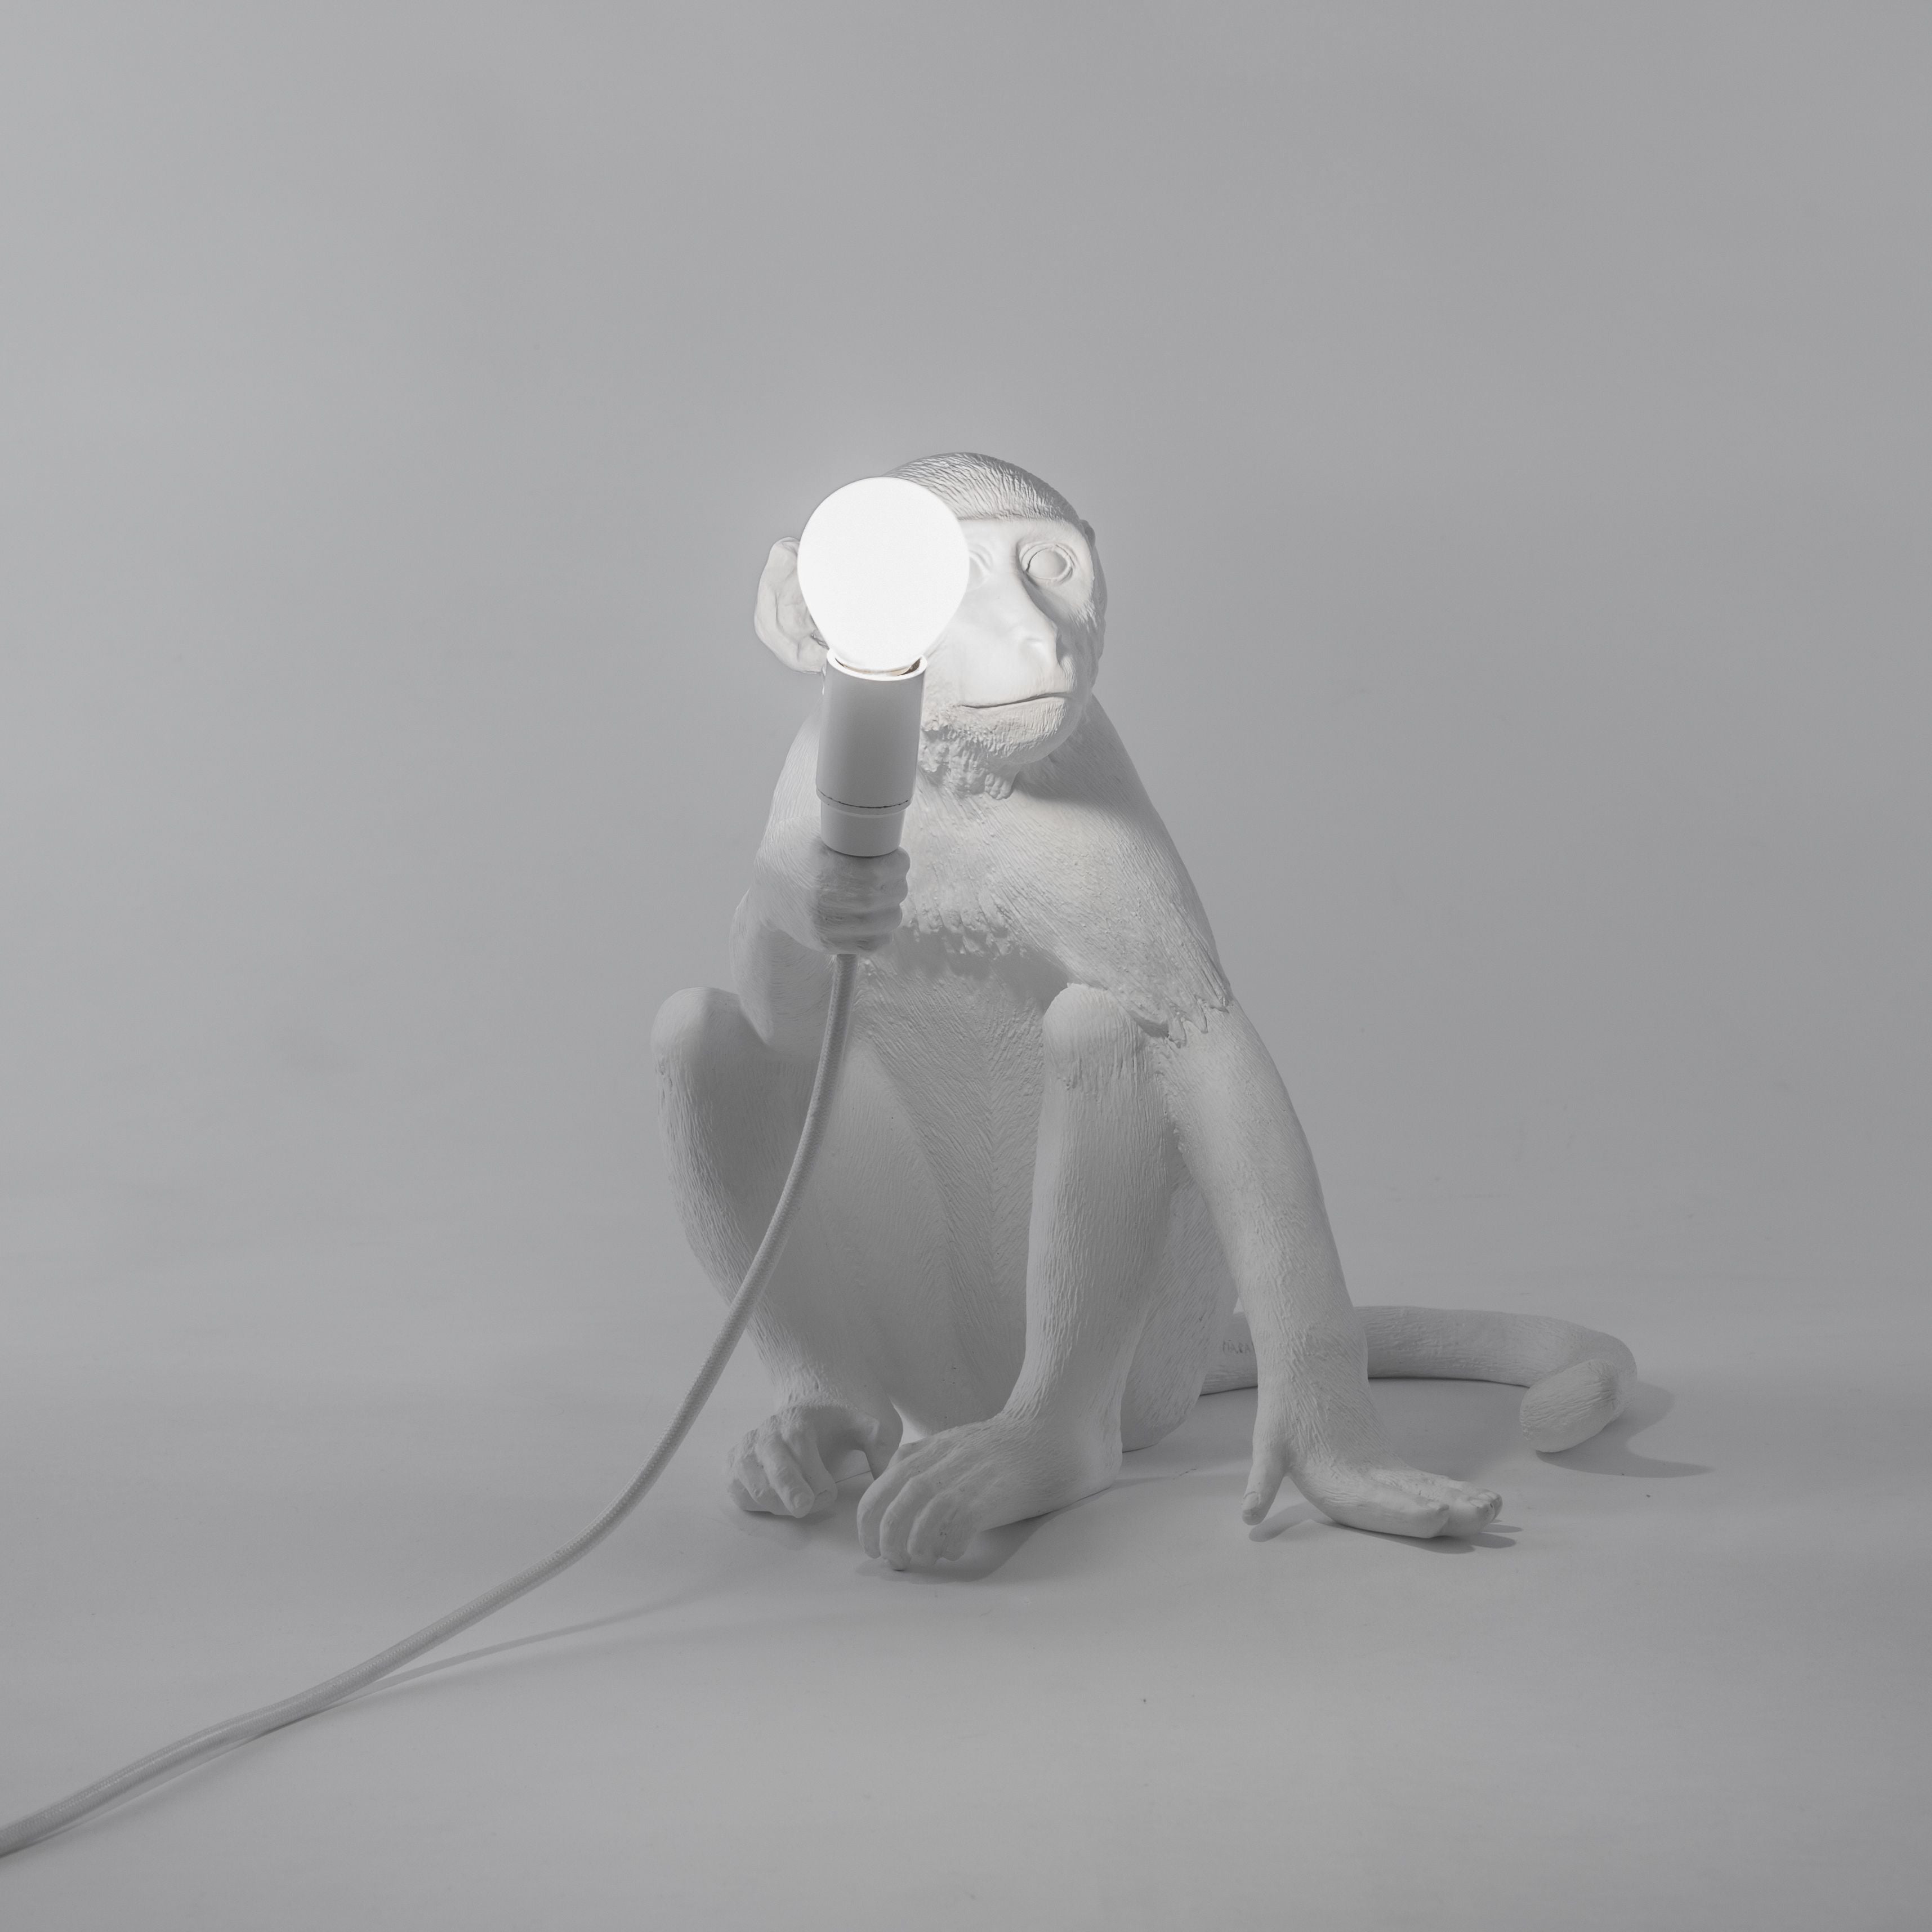 Seletti Monkey Indoor Lamp White, der sidder